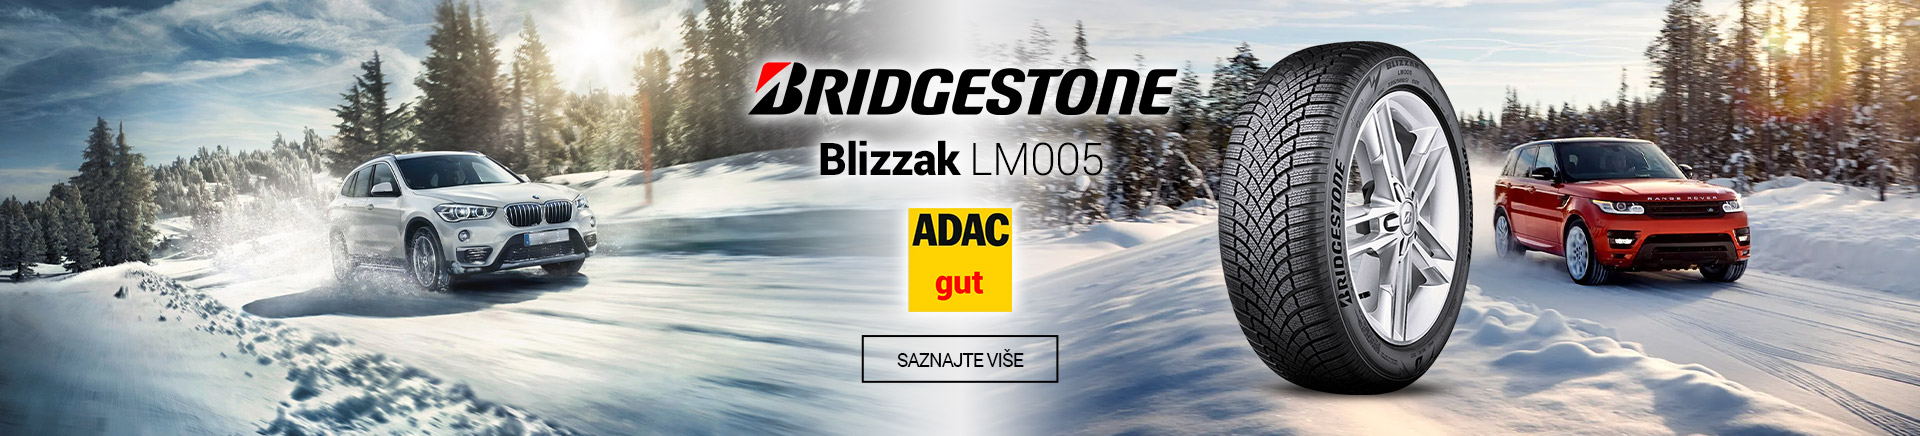 Bridgestone Blizzak LM005 adac gut